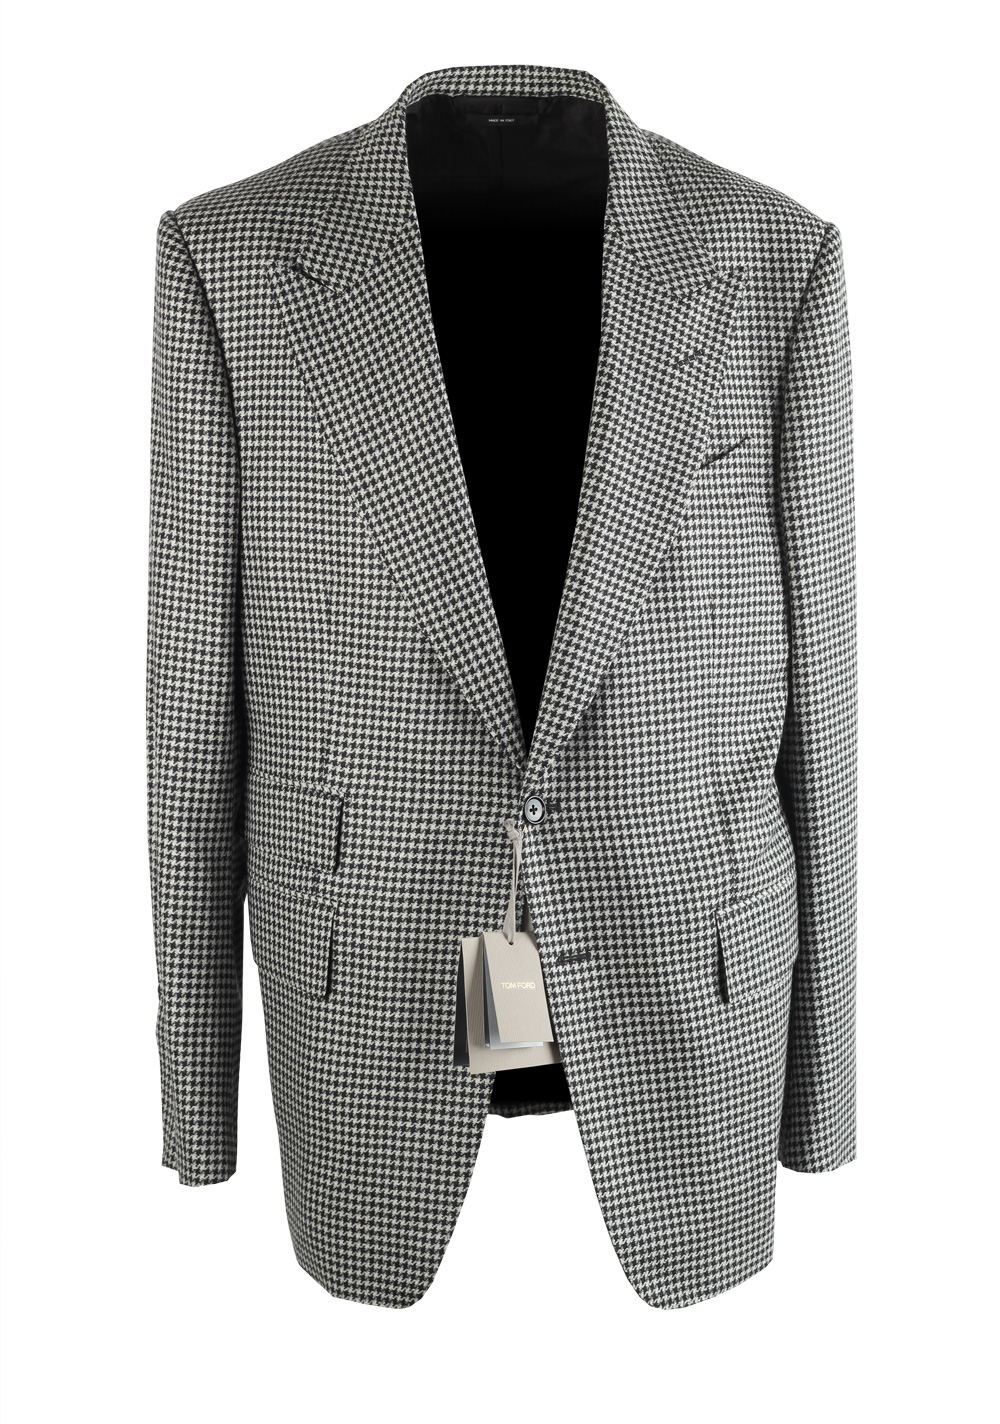 TOM FORD Shelton Houndstooth Black White Suit Size 54 / 44R U.S ...